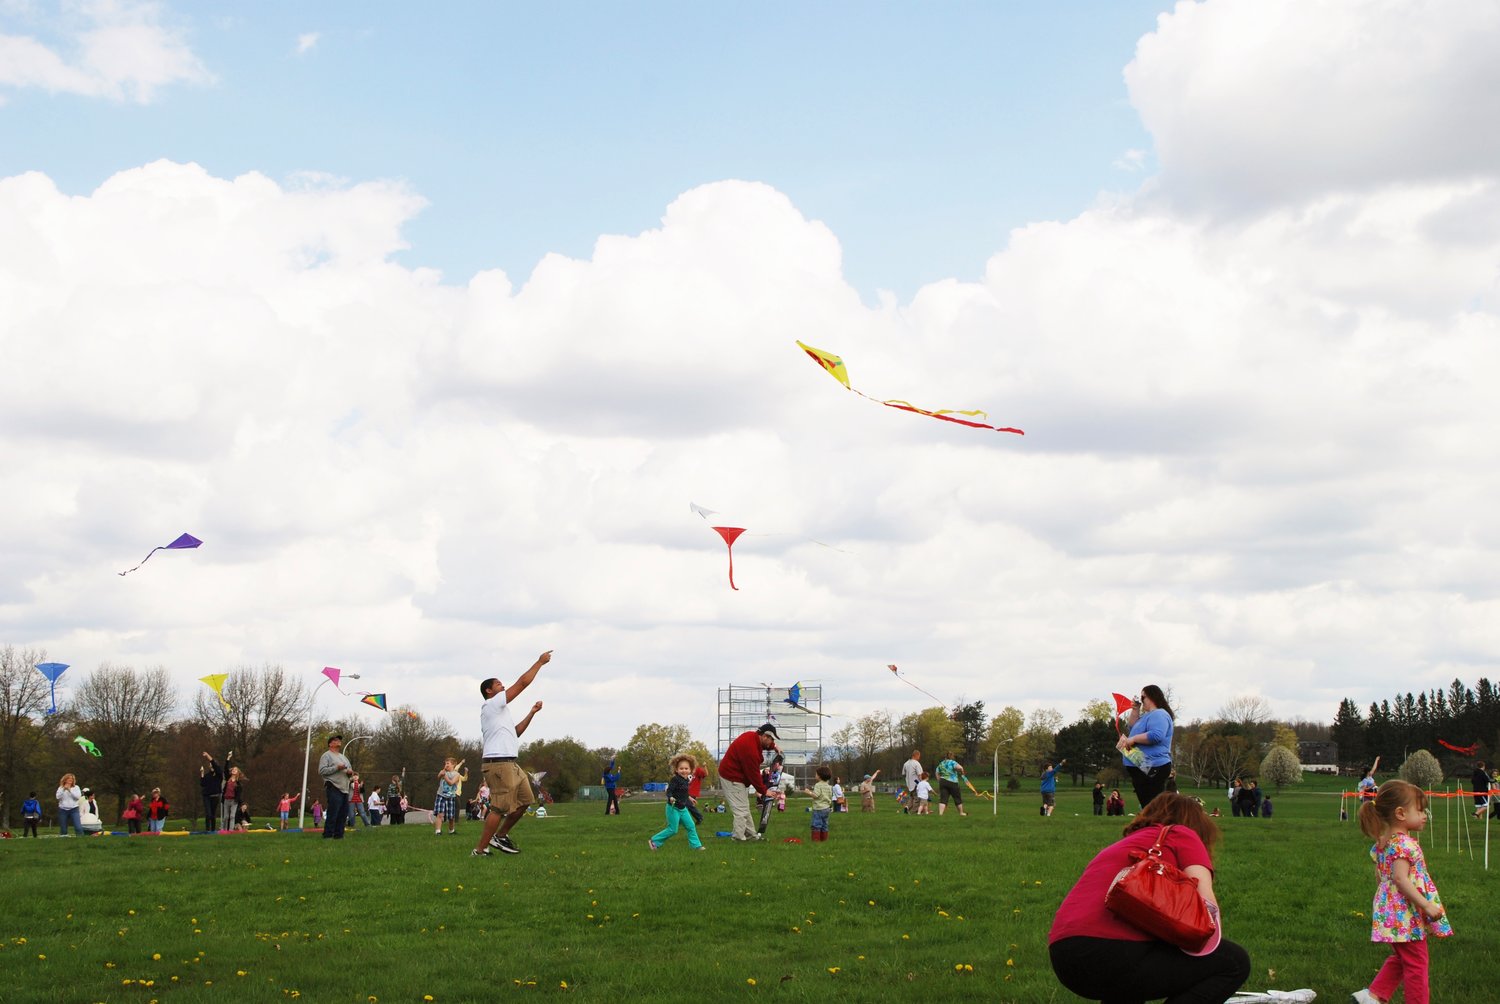 Flying kites at a past SUNY Sullivan Kite Festival.